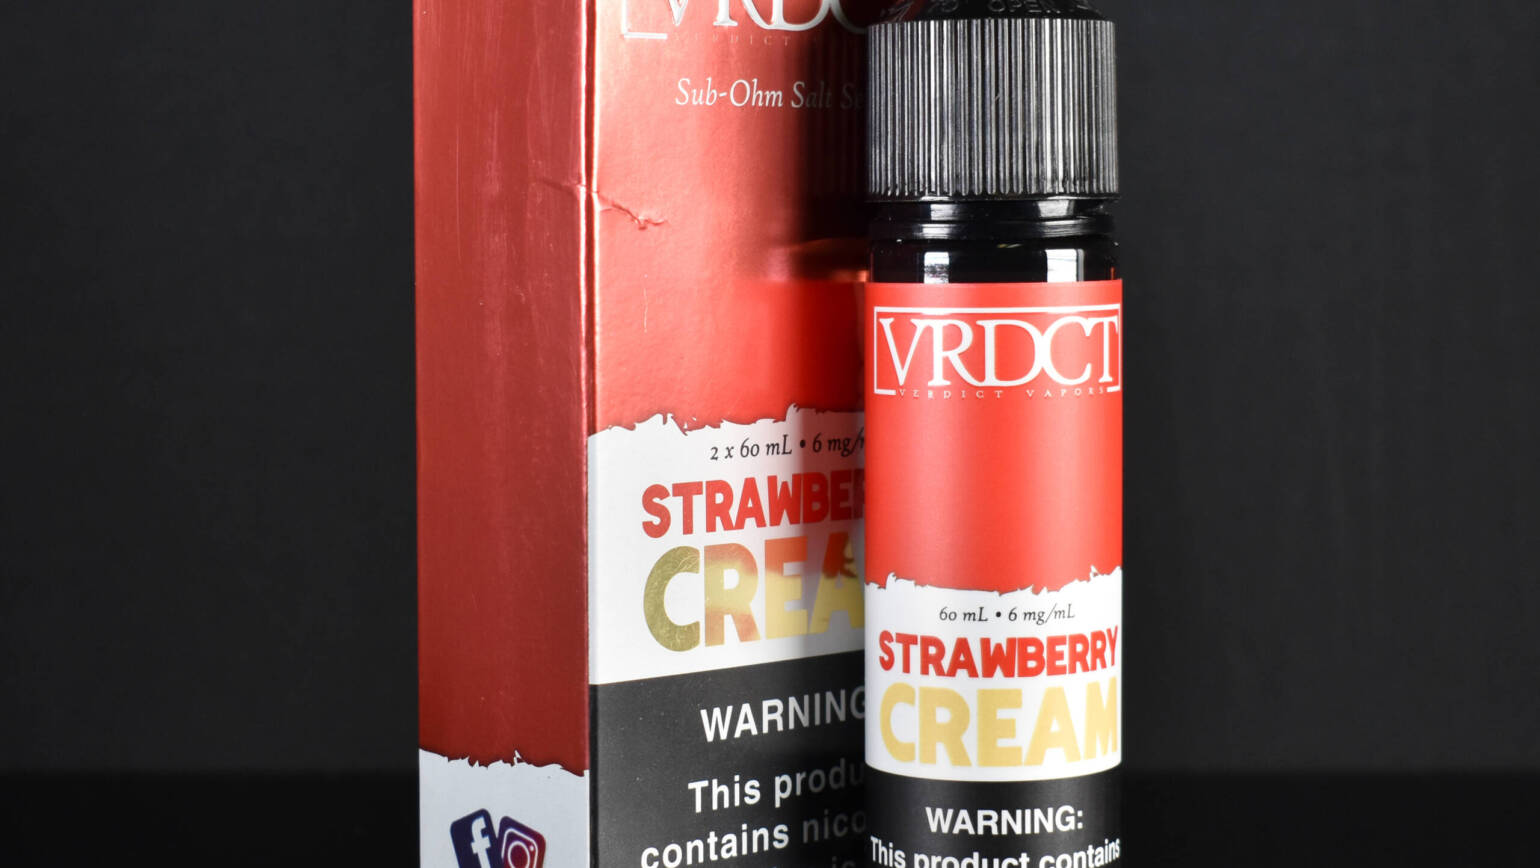 Verdict – Strawberry Cream